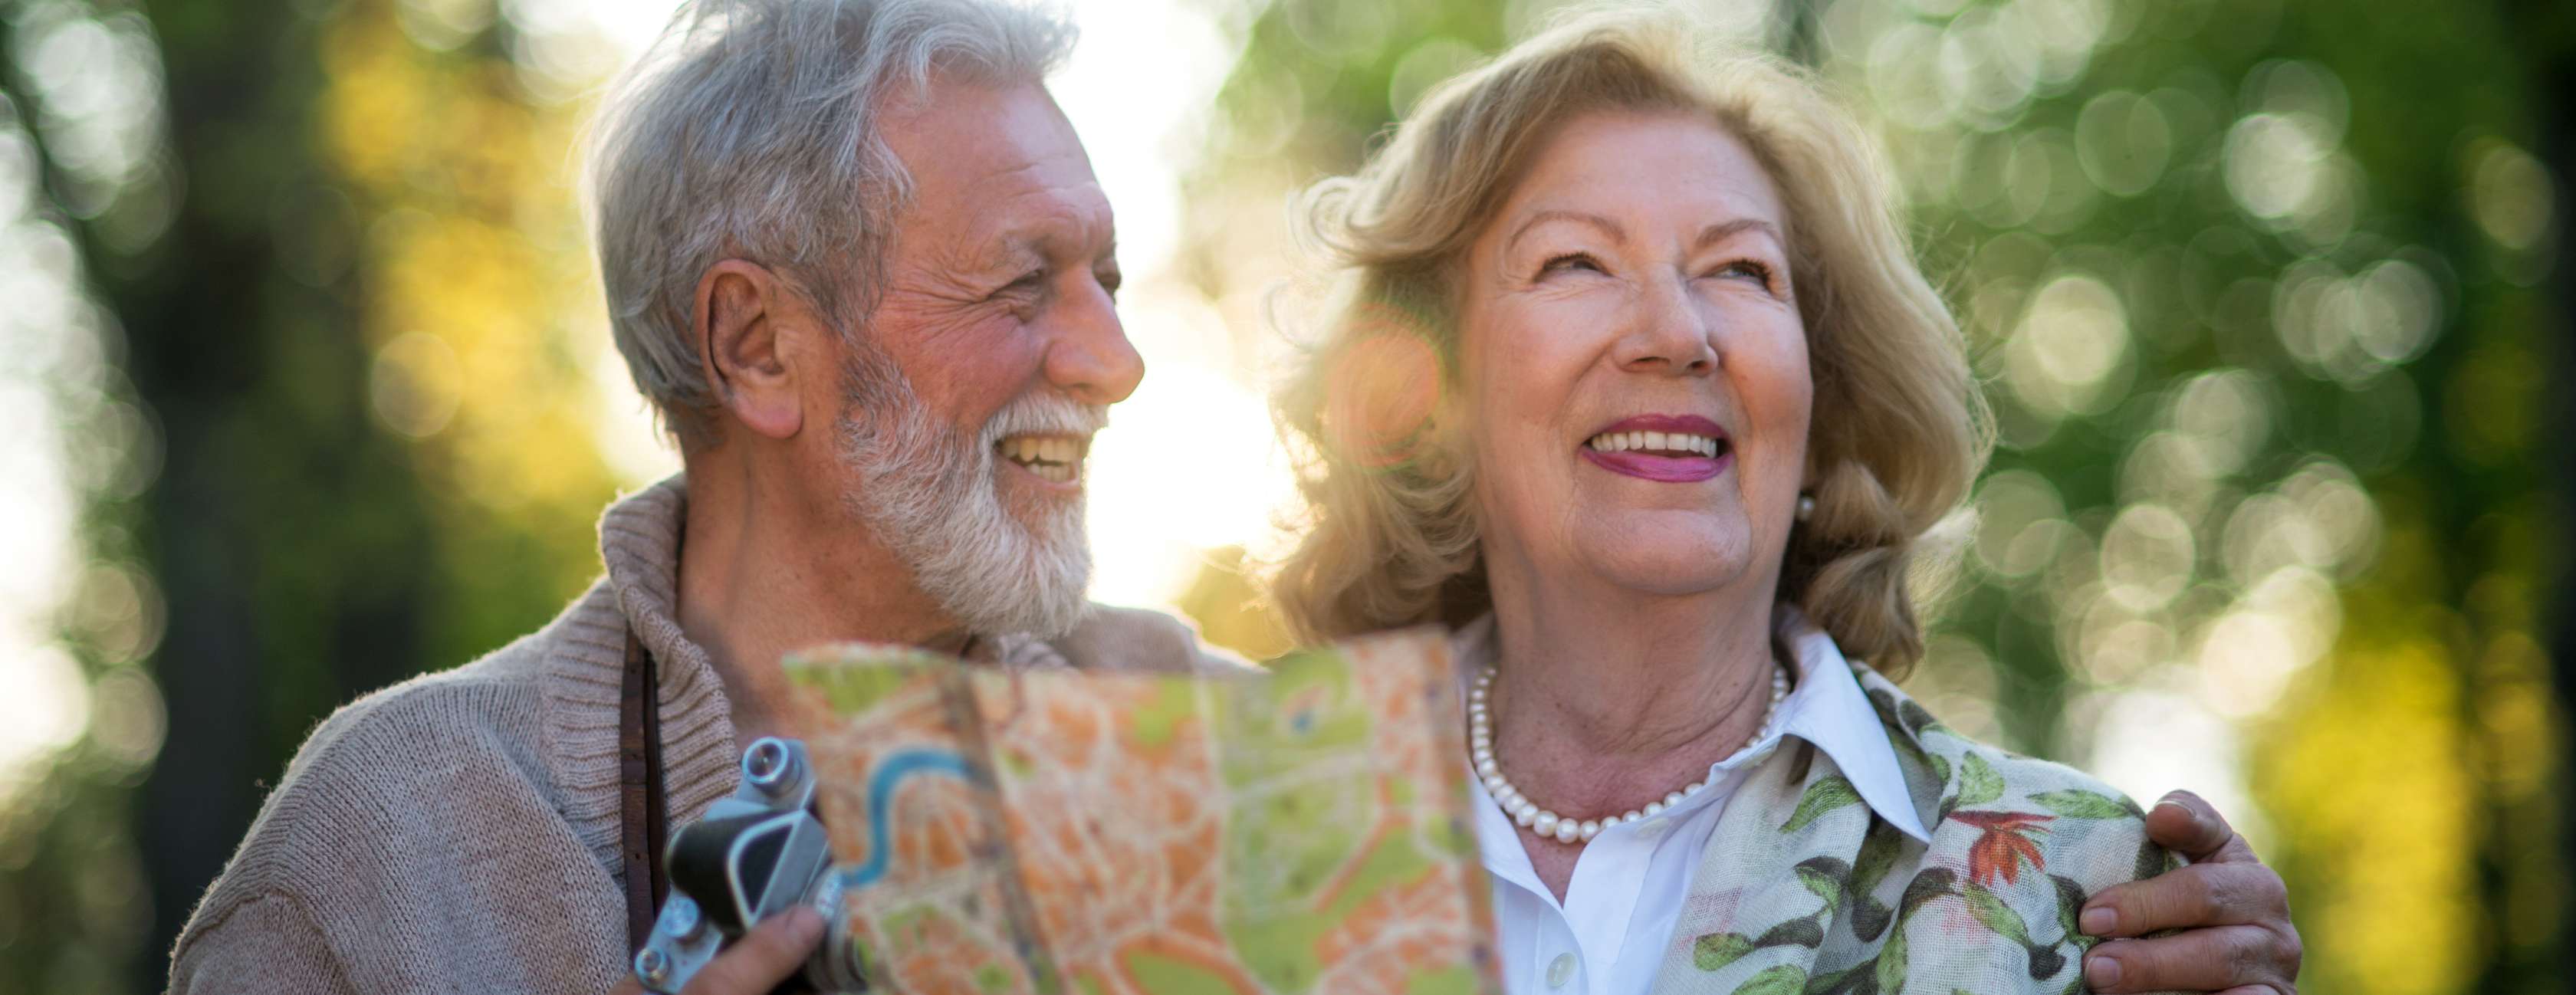 Allianz Kapital-UnfallSchutz: Älteres Ehepaar geht lächelnd im Grünen spazieren